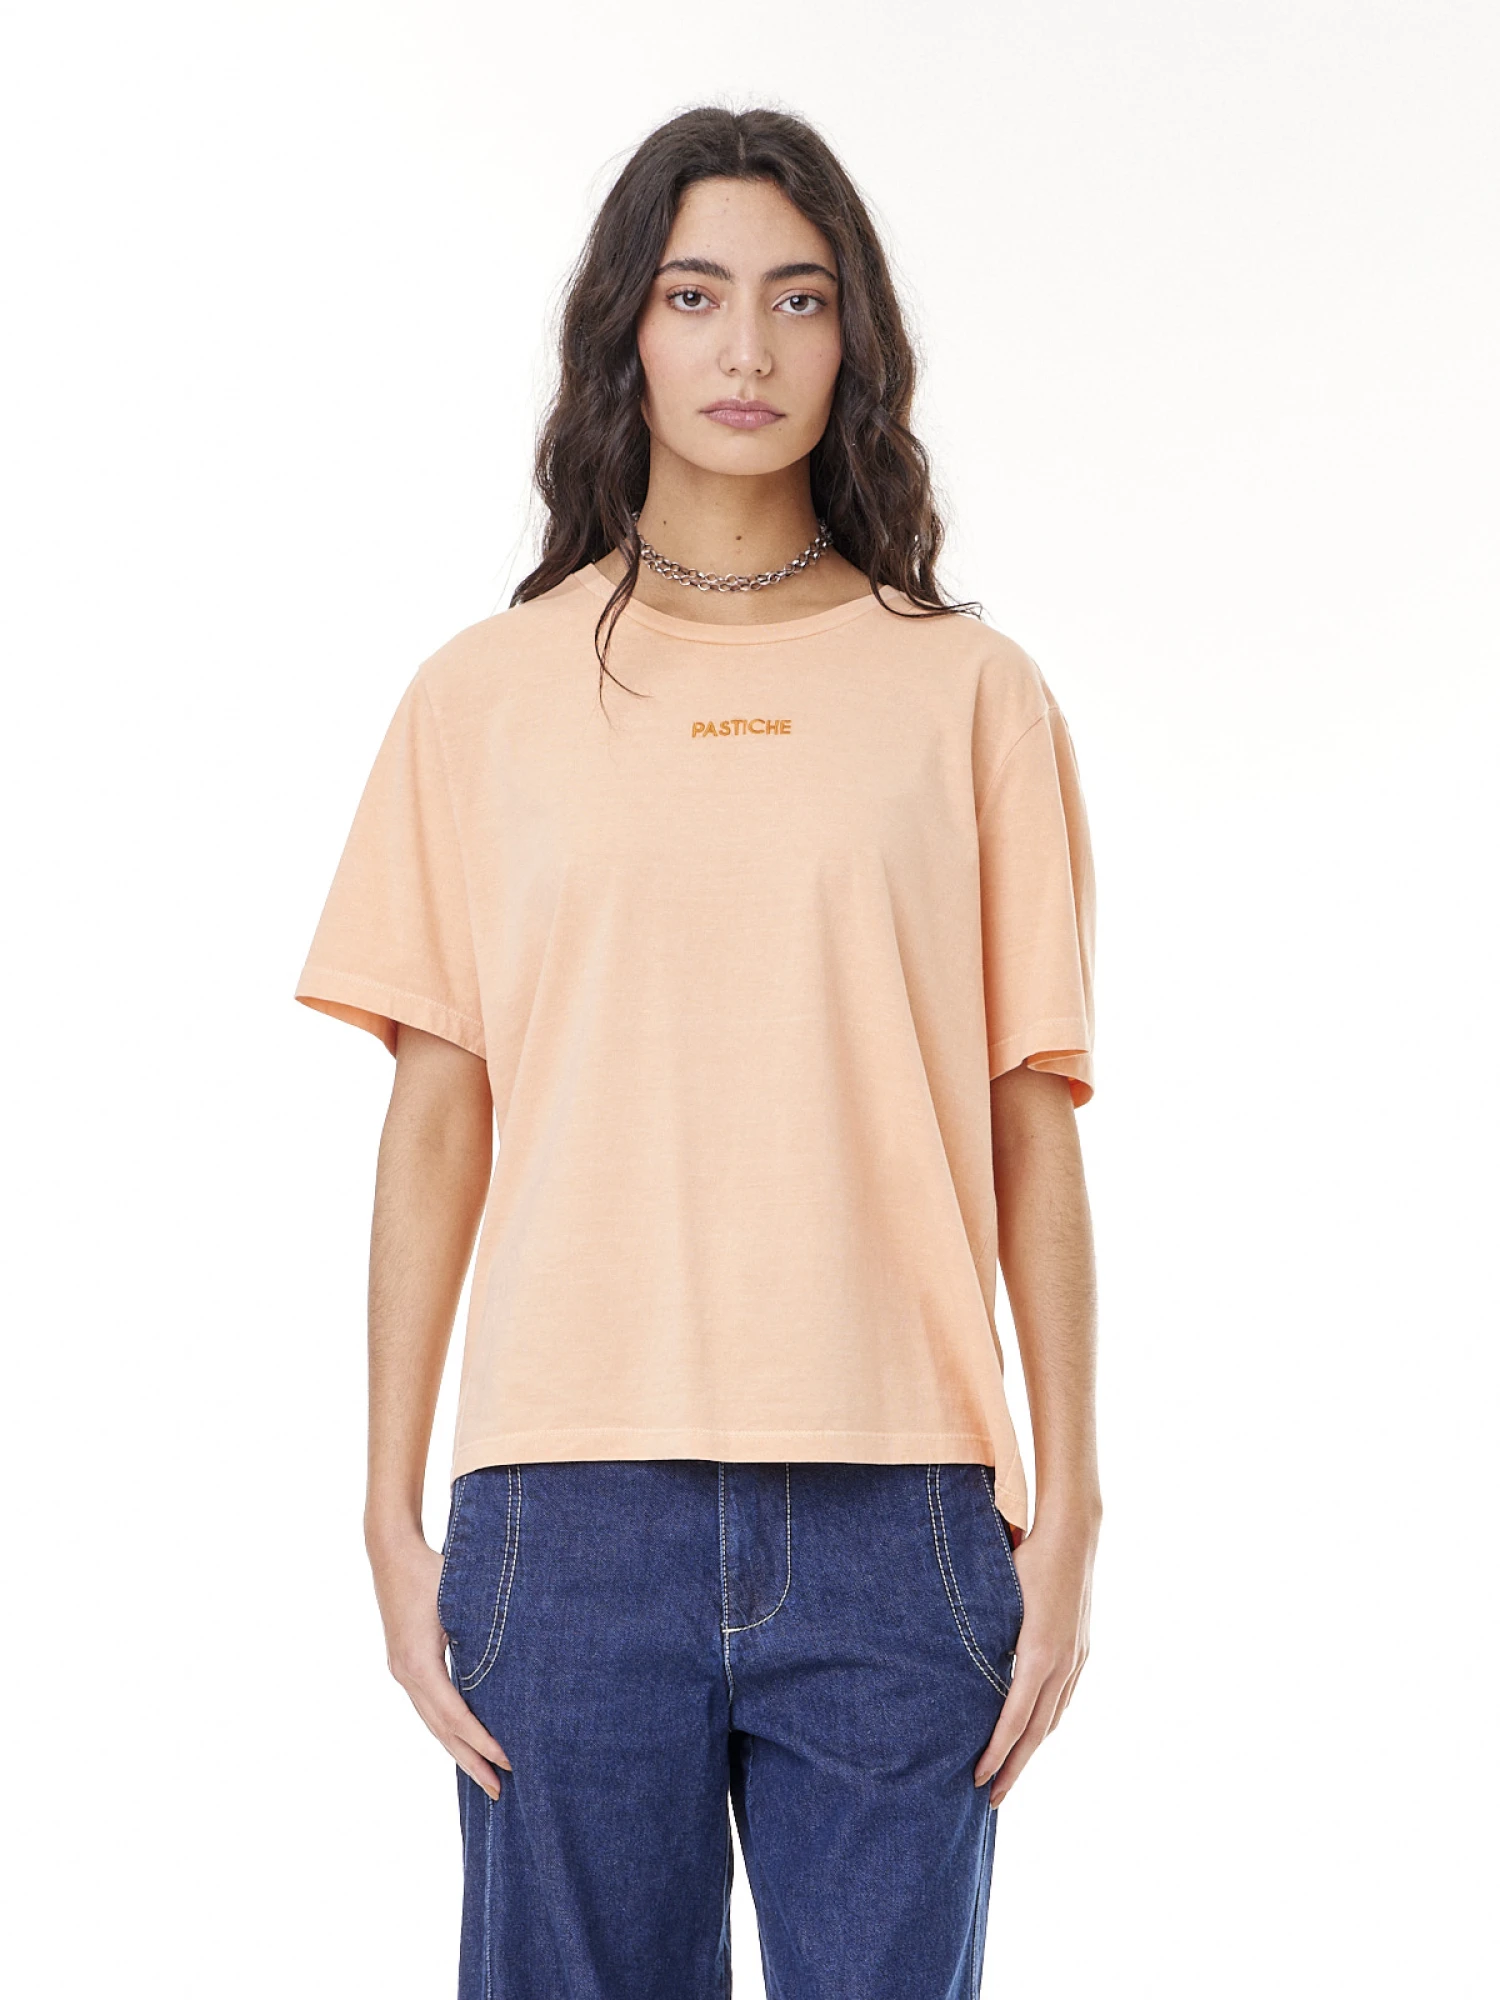 T-shirt Atenas naranja s